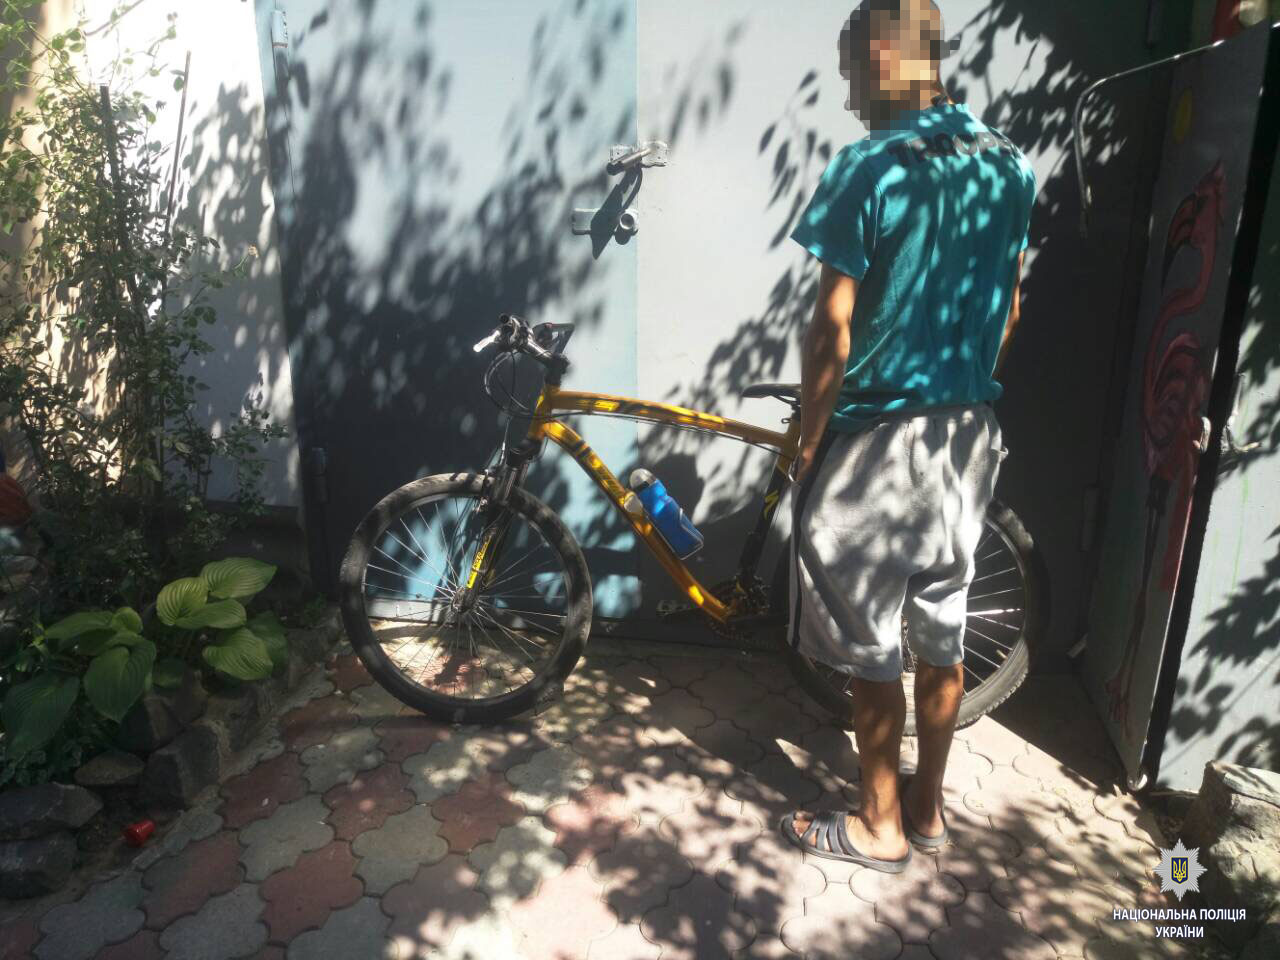 Харьковчанин украл велосипед у школьника (фото)
